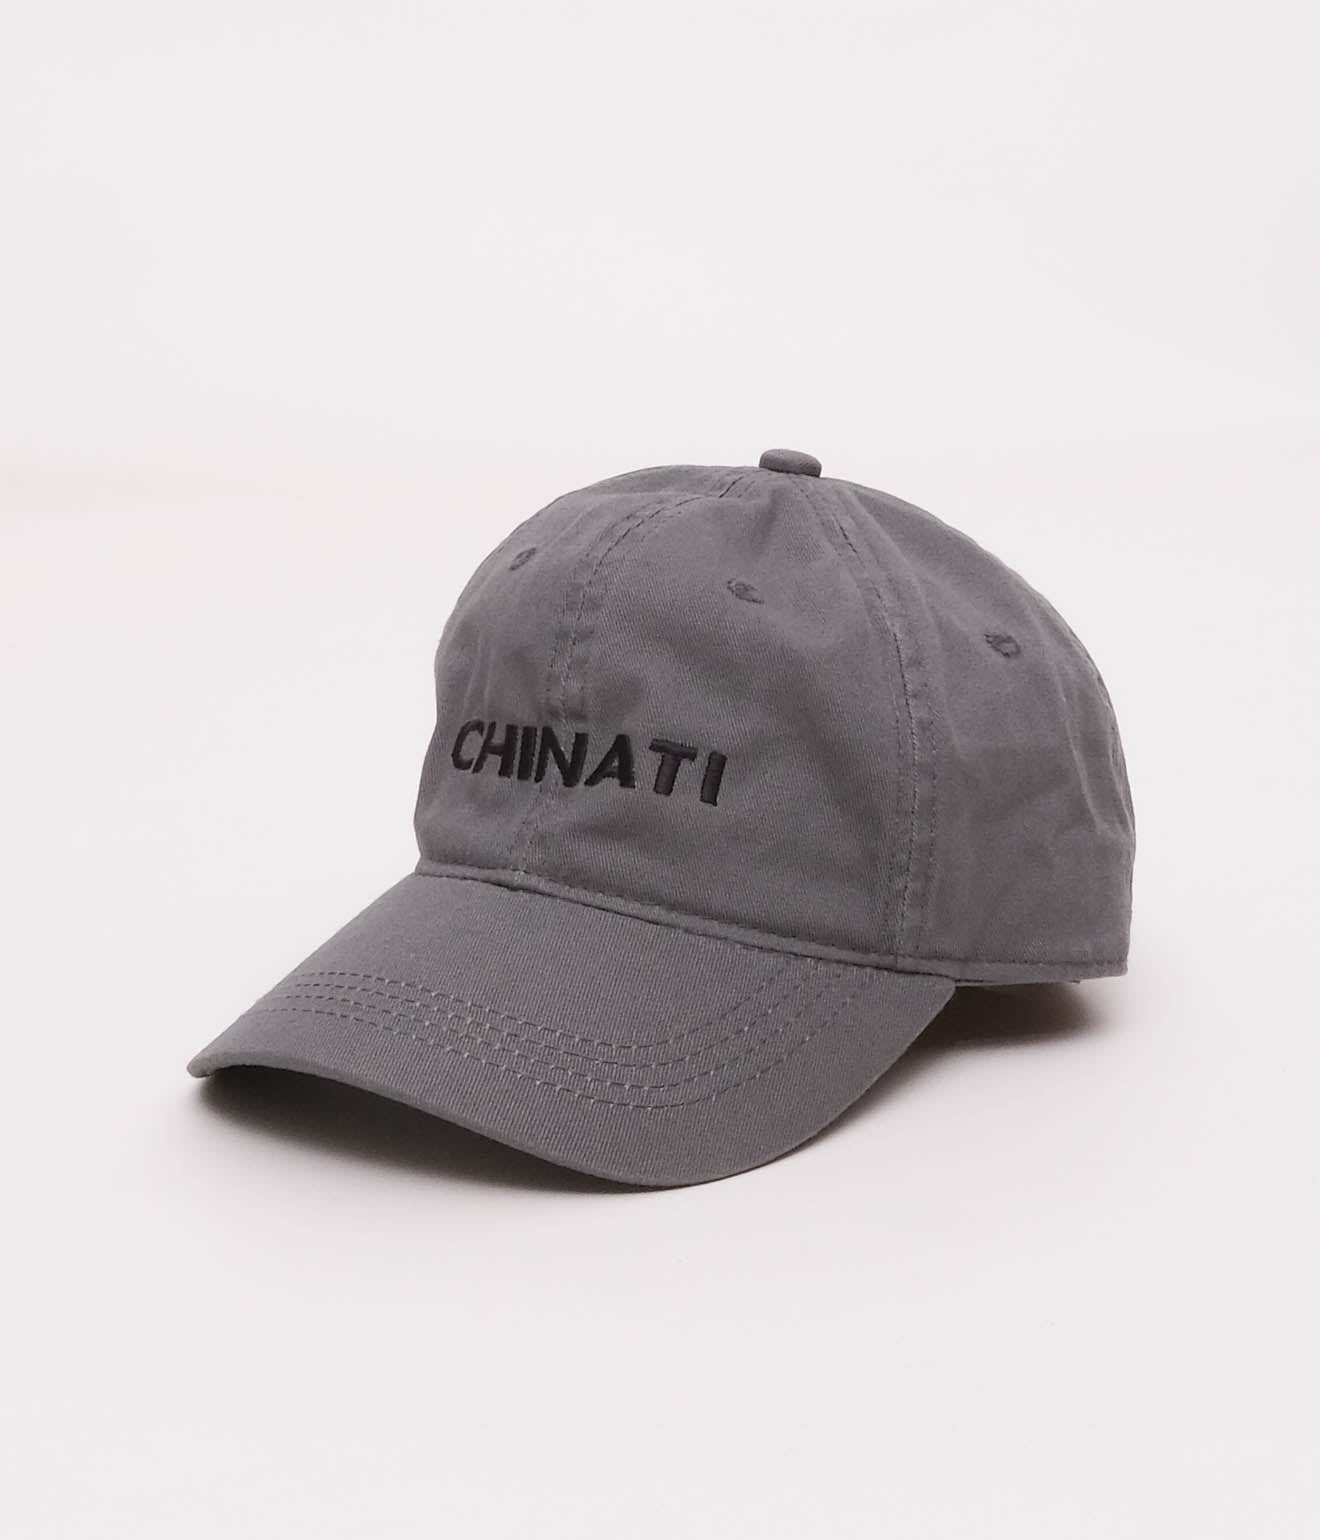 Souvenir Goods "CHINATI CAP" (Grey)